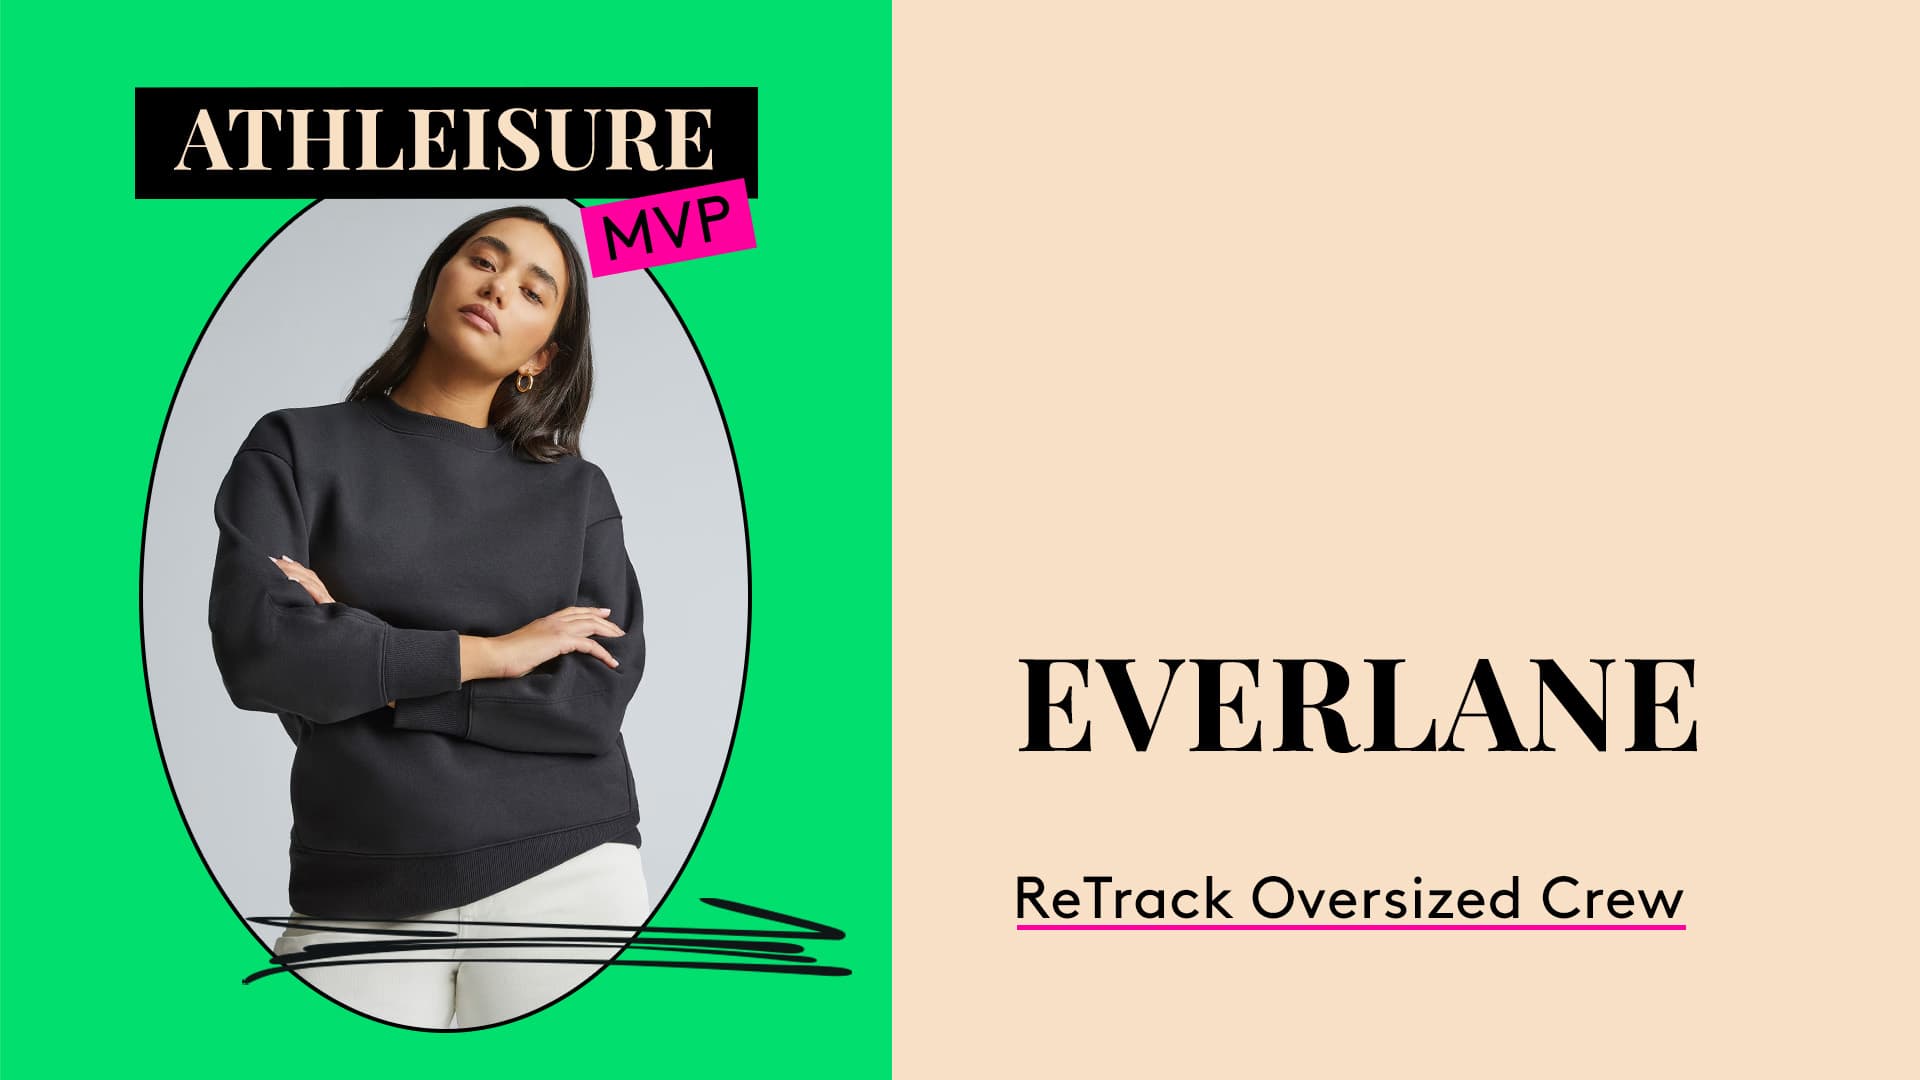 Athleisure MVP. Everlane ReTrack Oversized Crew.